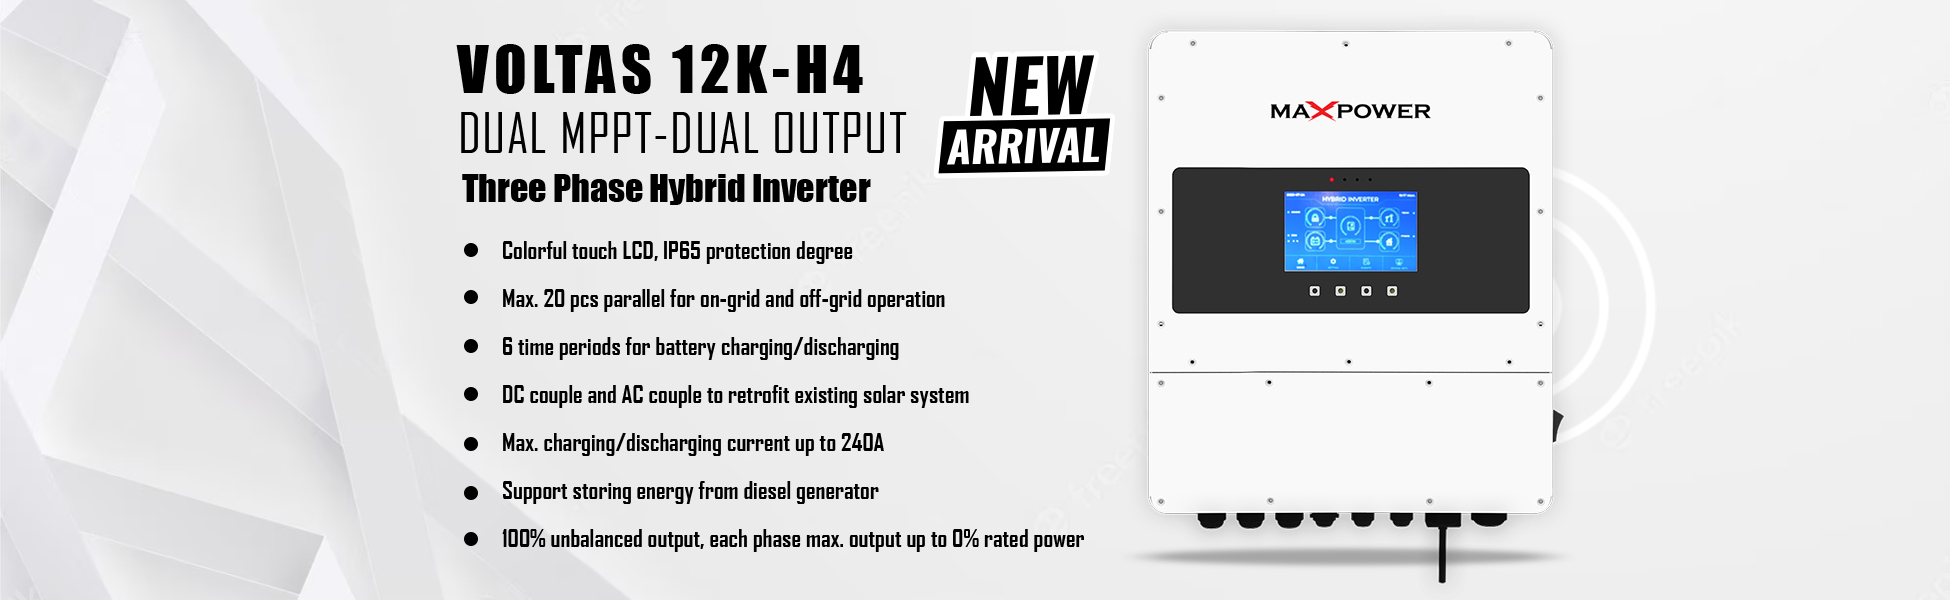 Voltas 12K-H4 Hybrid Inverter